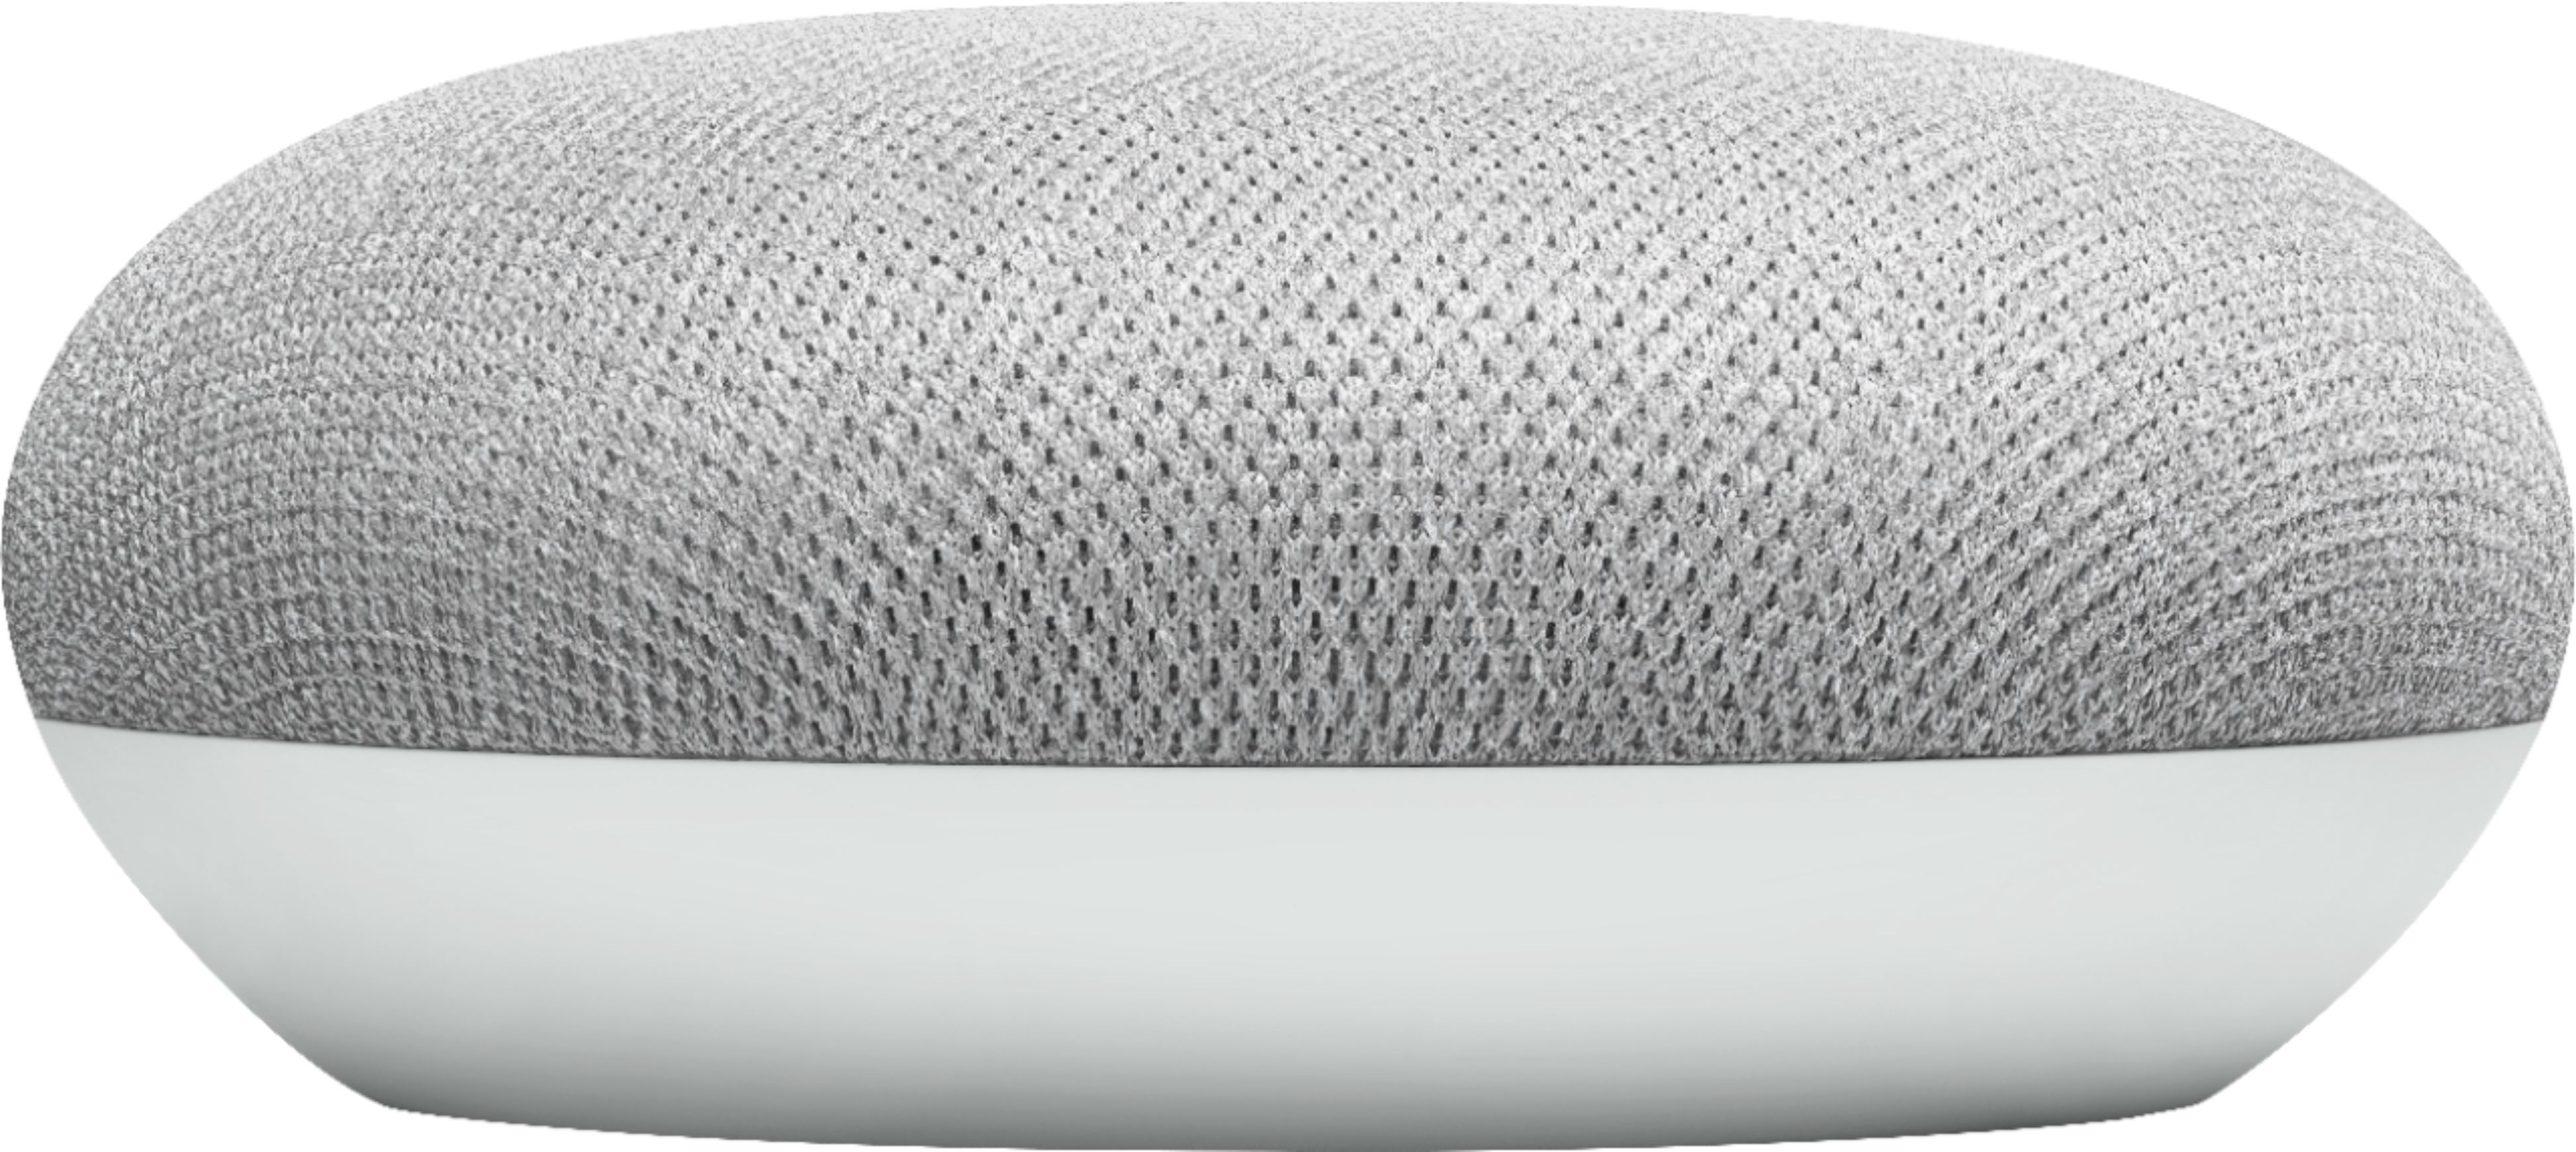 for sale online Chalk Google Home Mini Smart Speaker with Google Assistant GA00210-US 